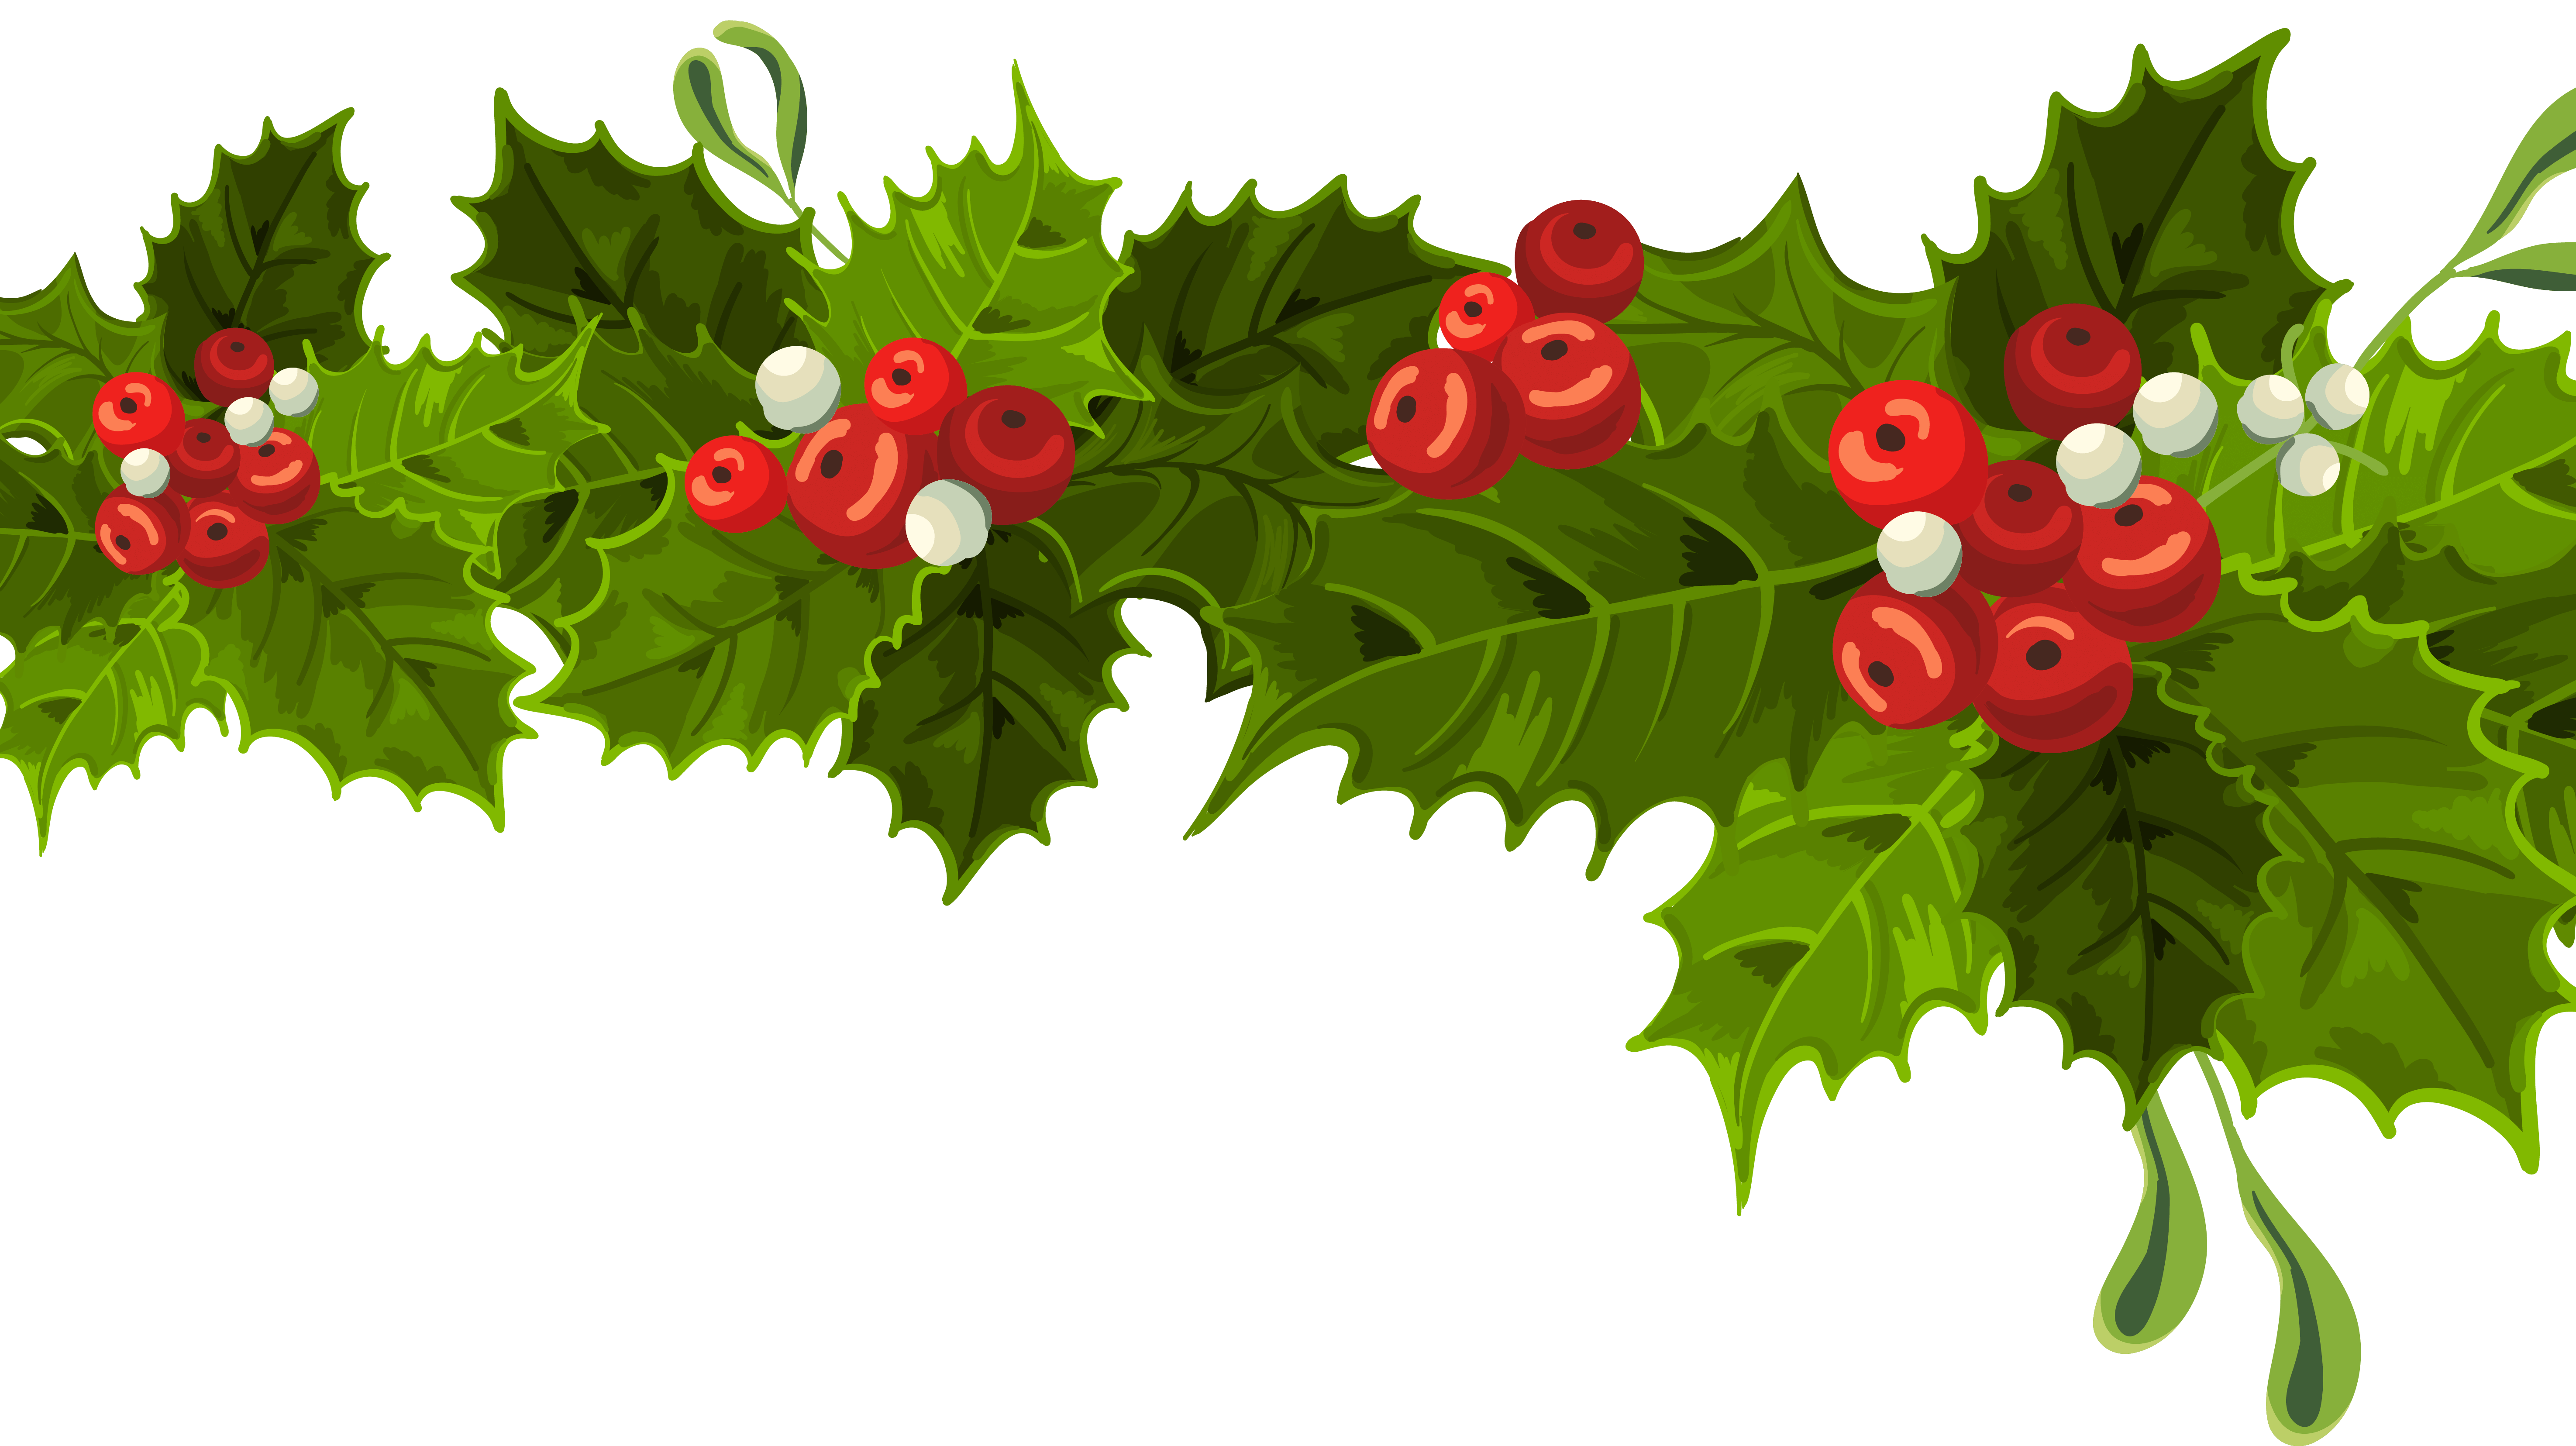 2. "Christmas Mistletoe Nail Art Tutorial" - wide 6